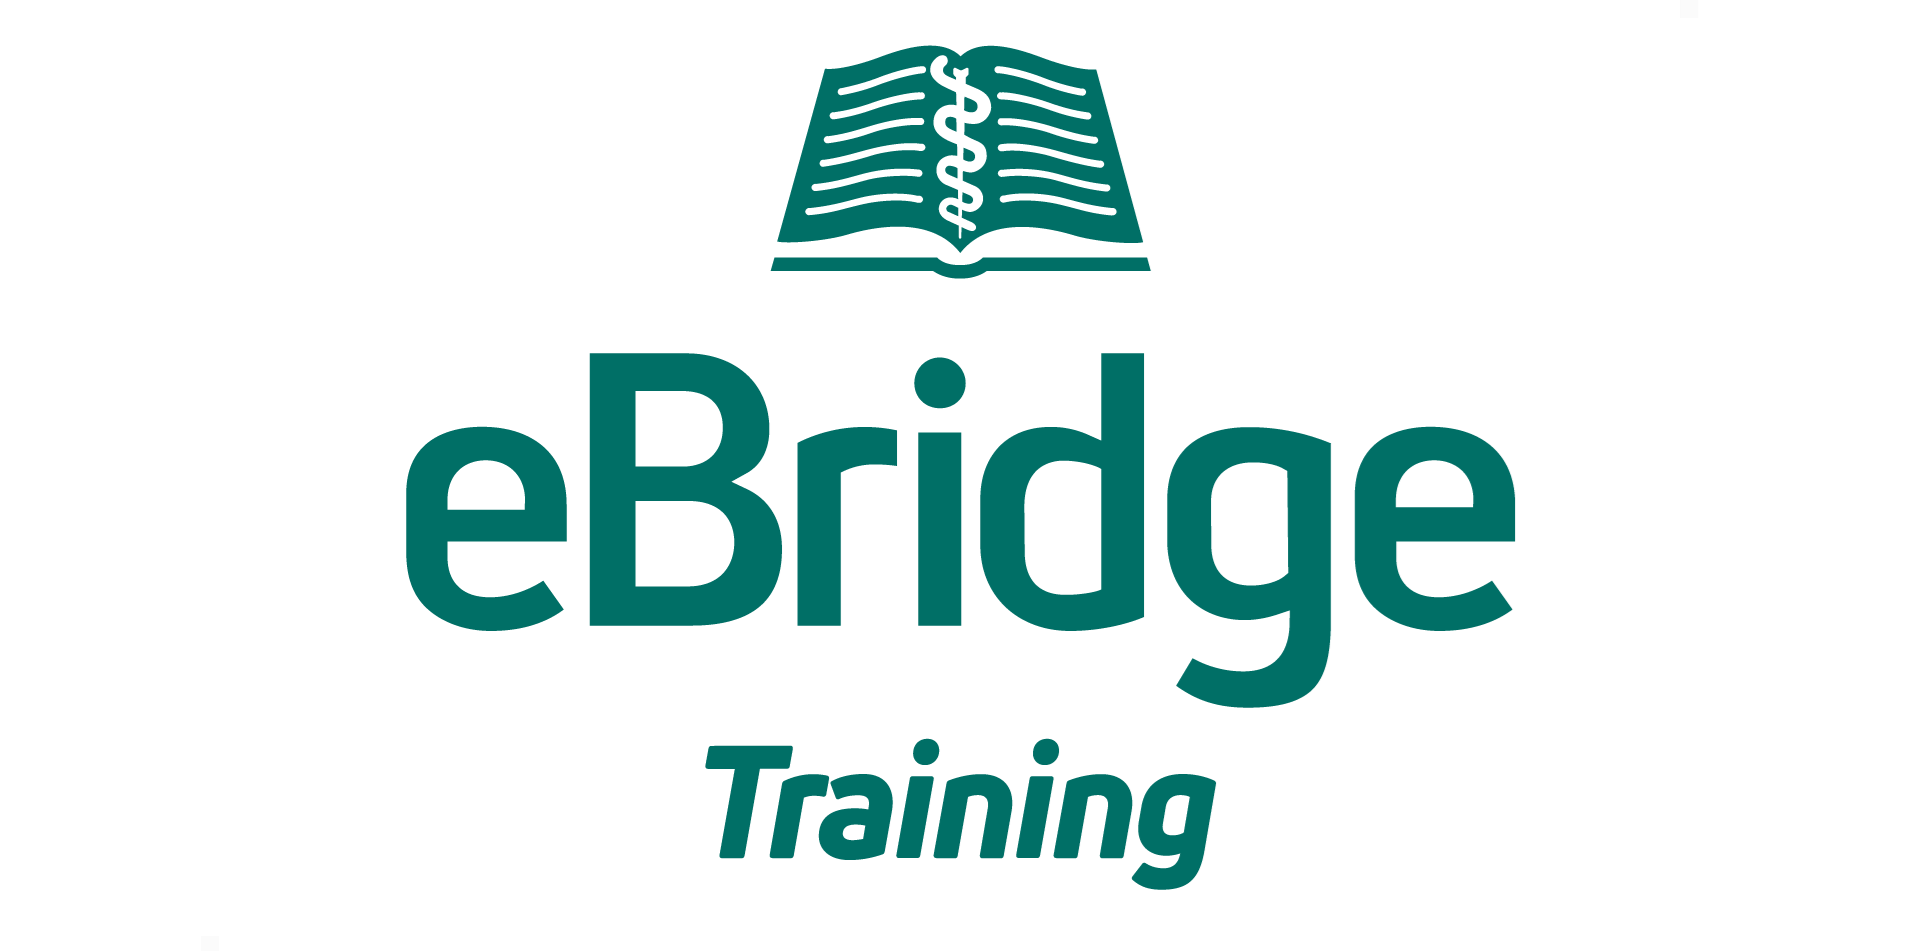 ebridge-training2019